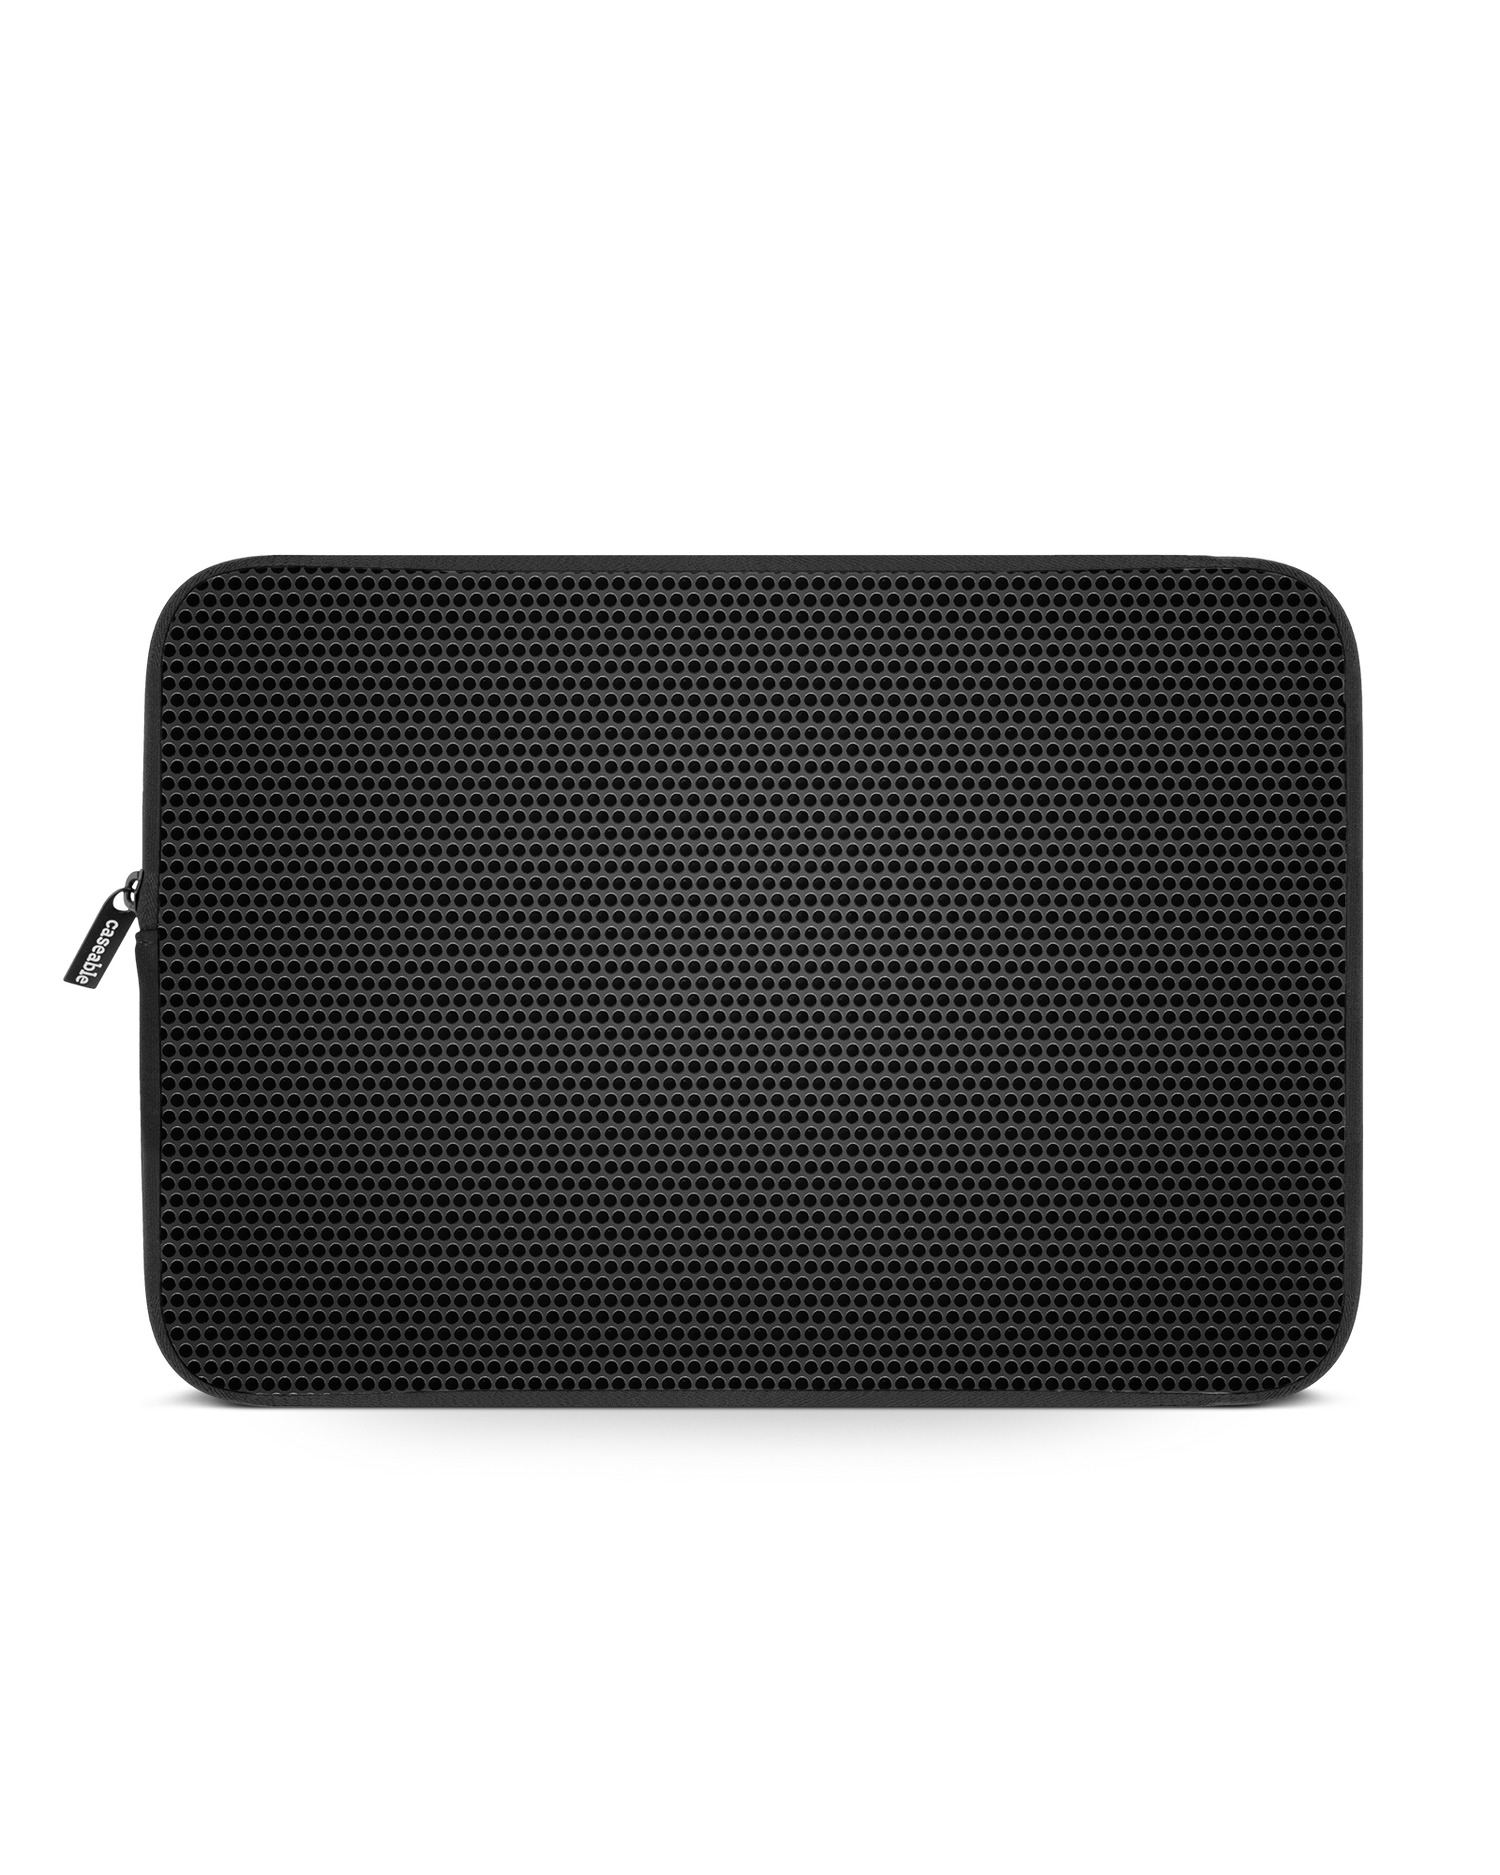 Carbon II Laptop Case 14 inch: Front View